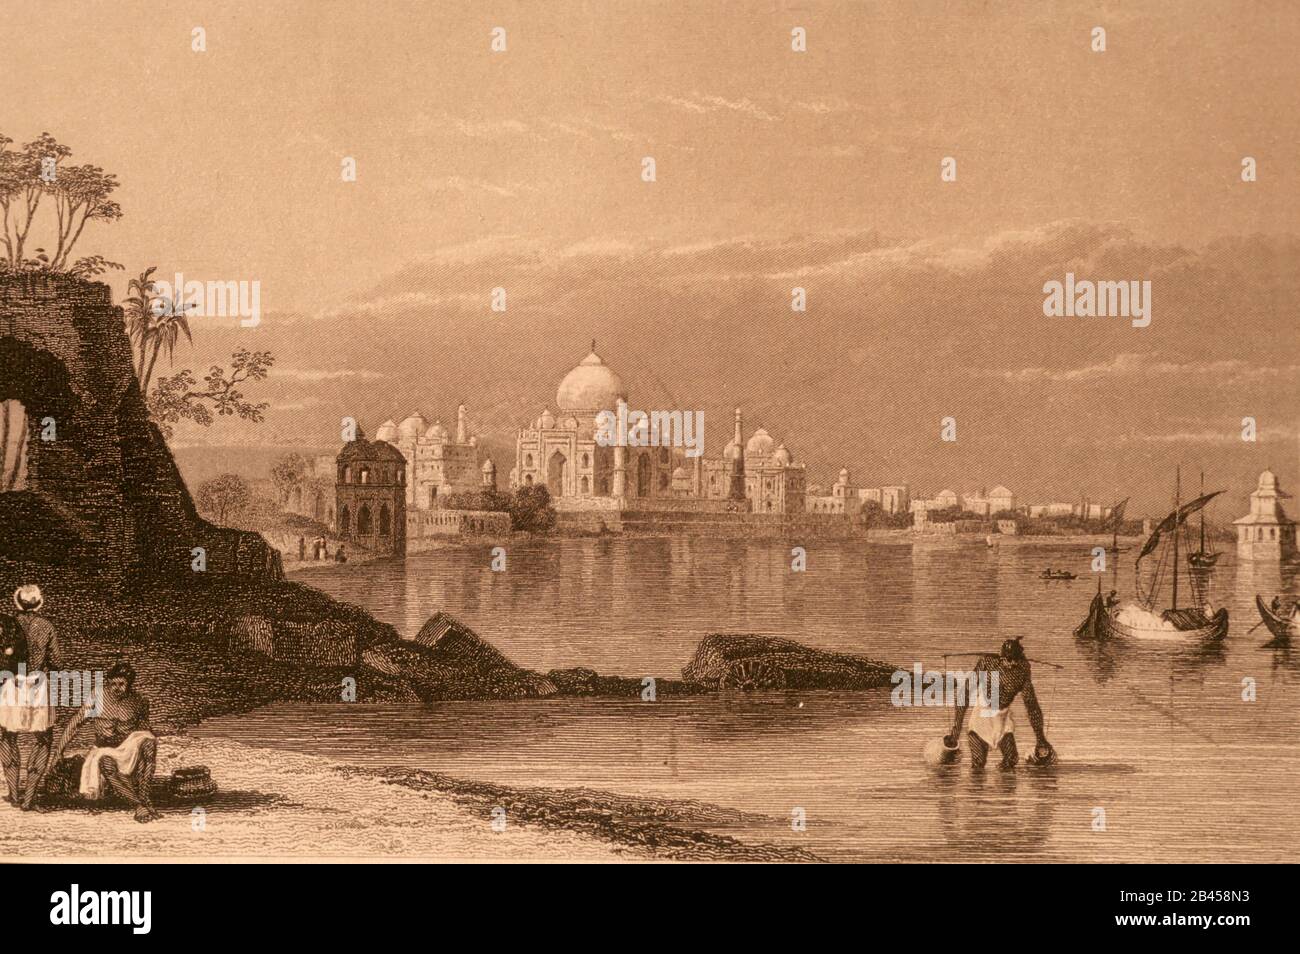 Taj Mahal, agra, uttar pradesh, India, Asia, old vintage 1800s lithograph Stock Photo